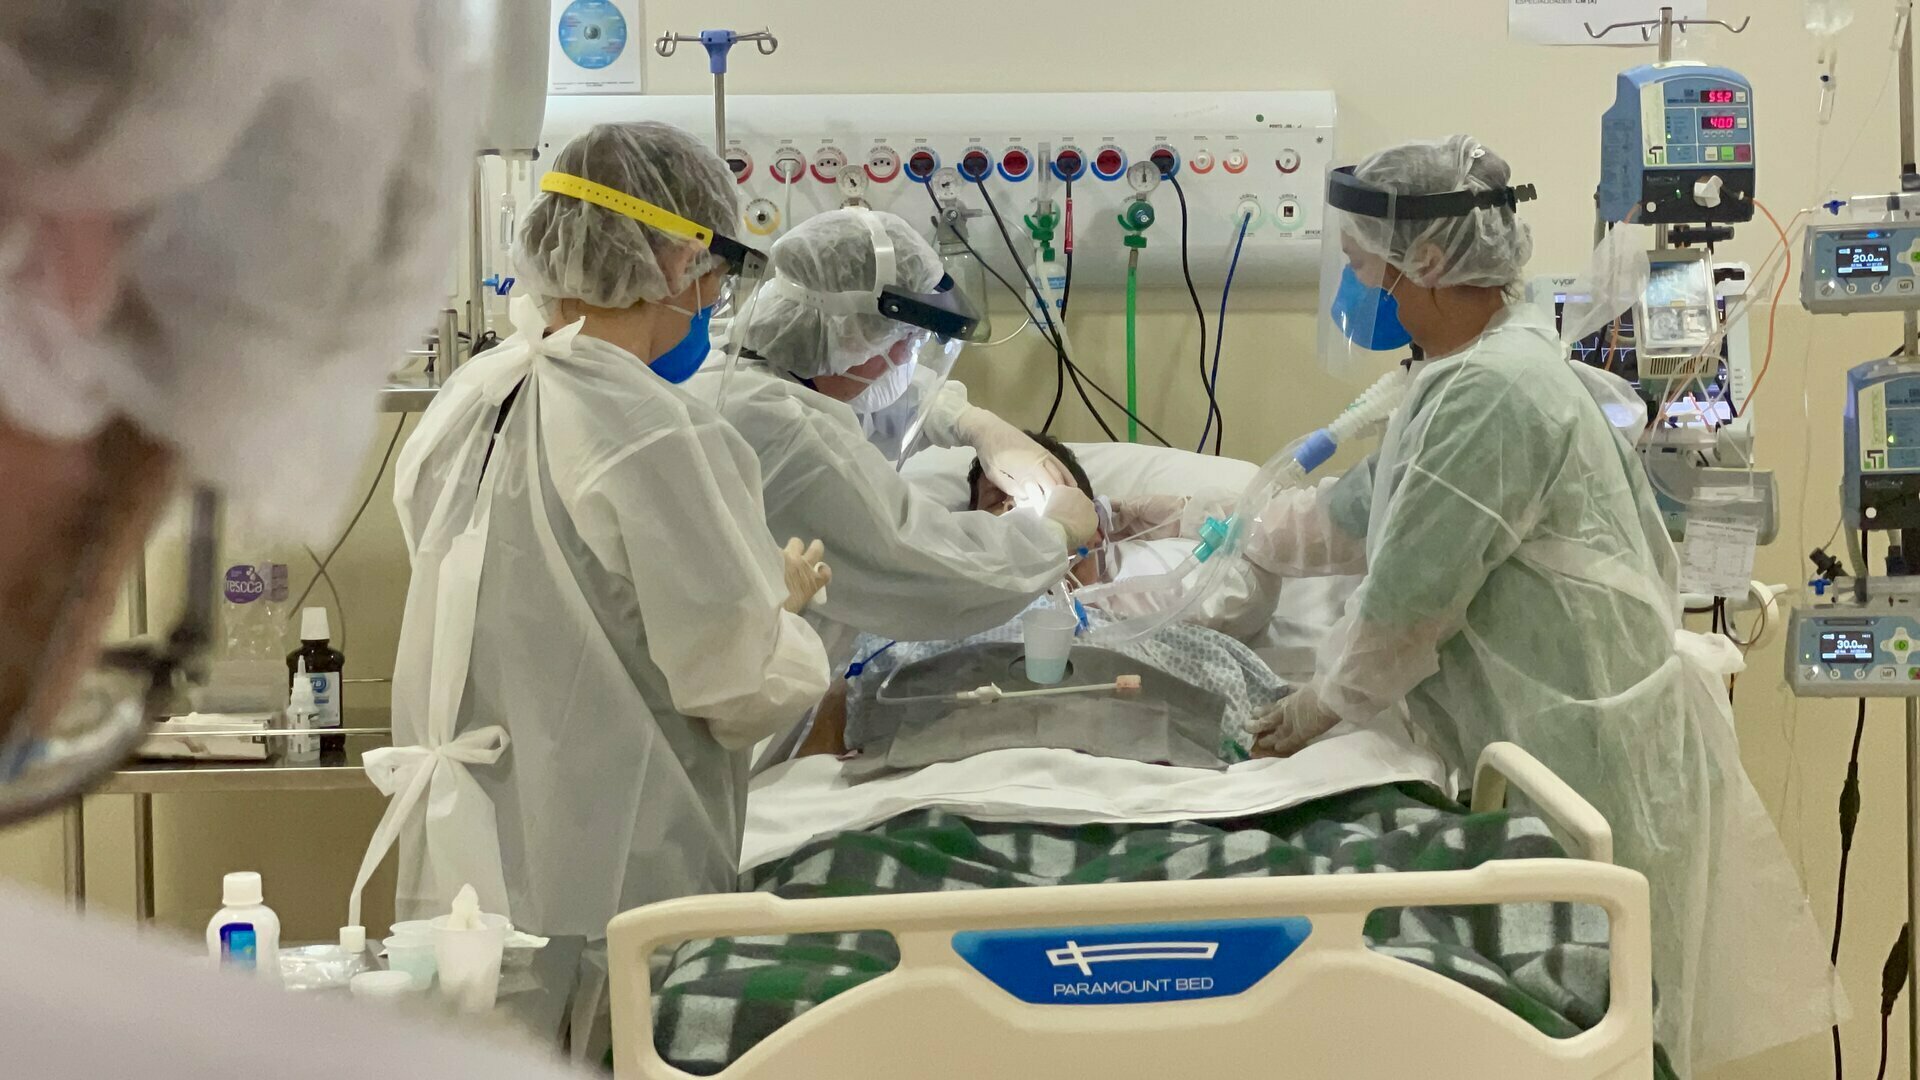 Odontologia Hospitalar na pandemia: a batalha pela vida